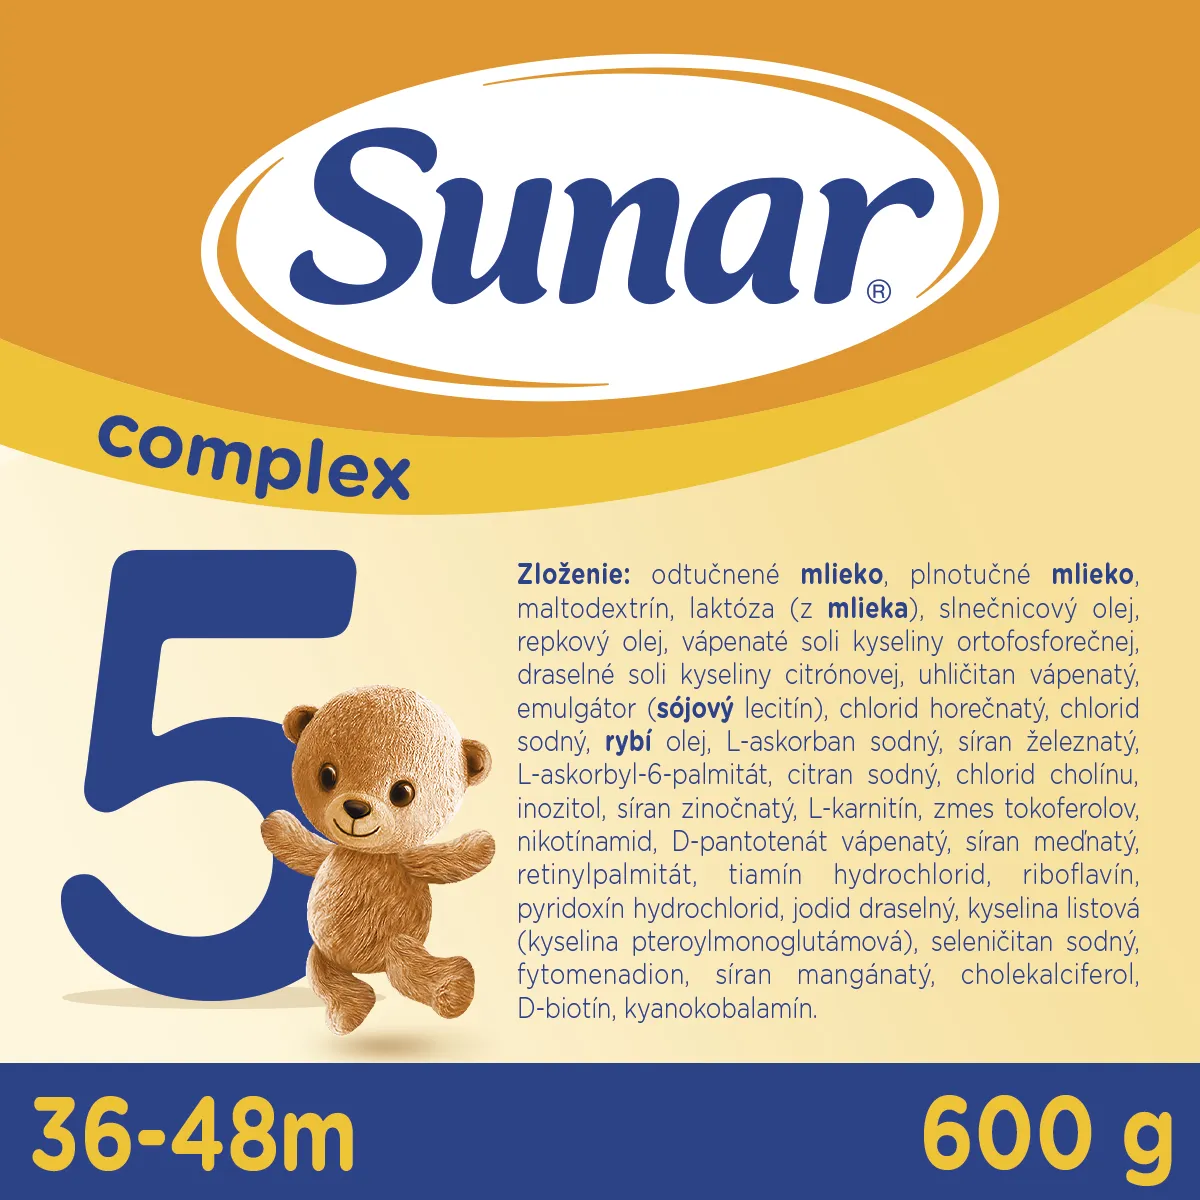 Sunar Complex 5 8×600 g, detská výživa